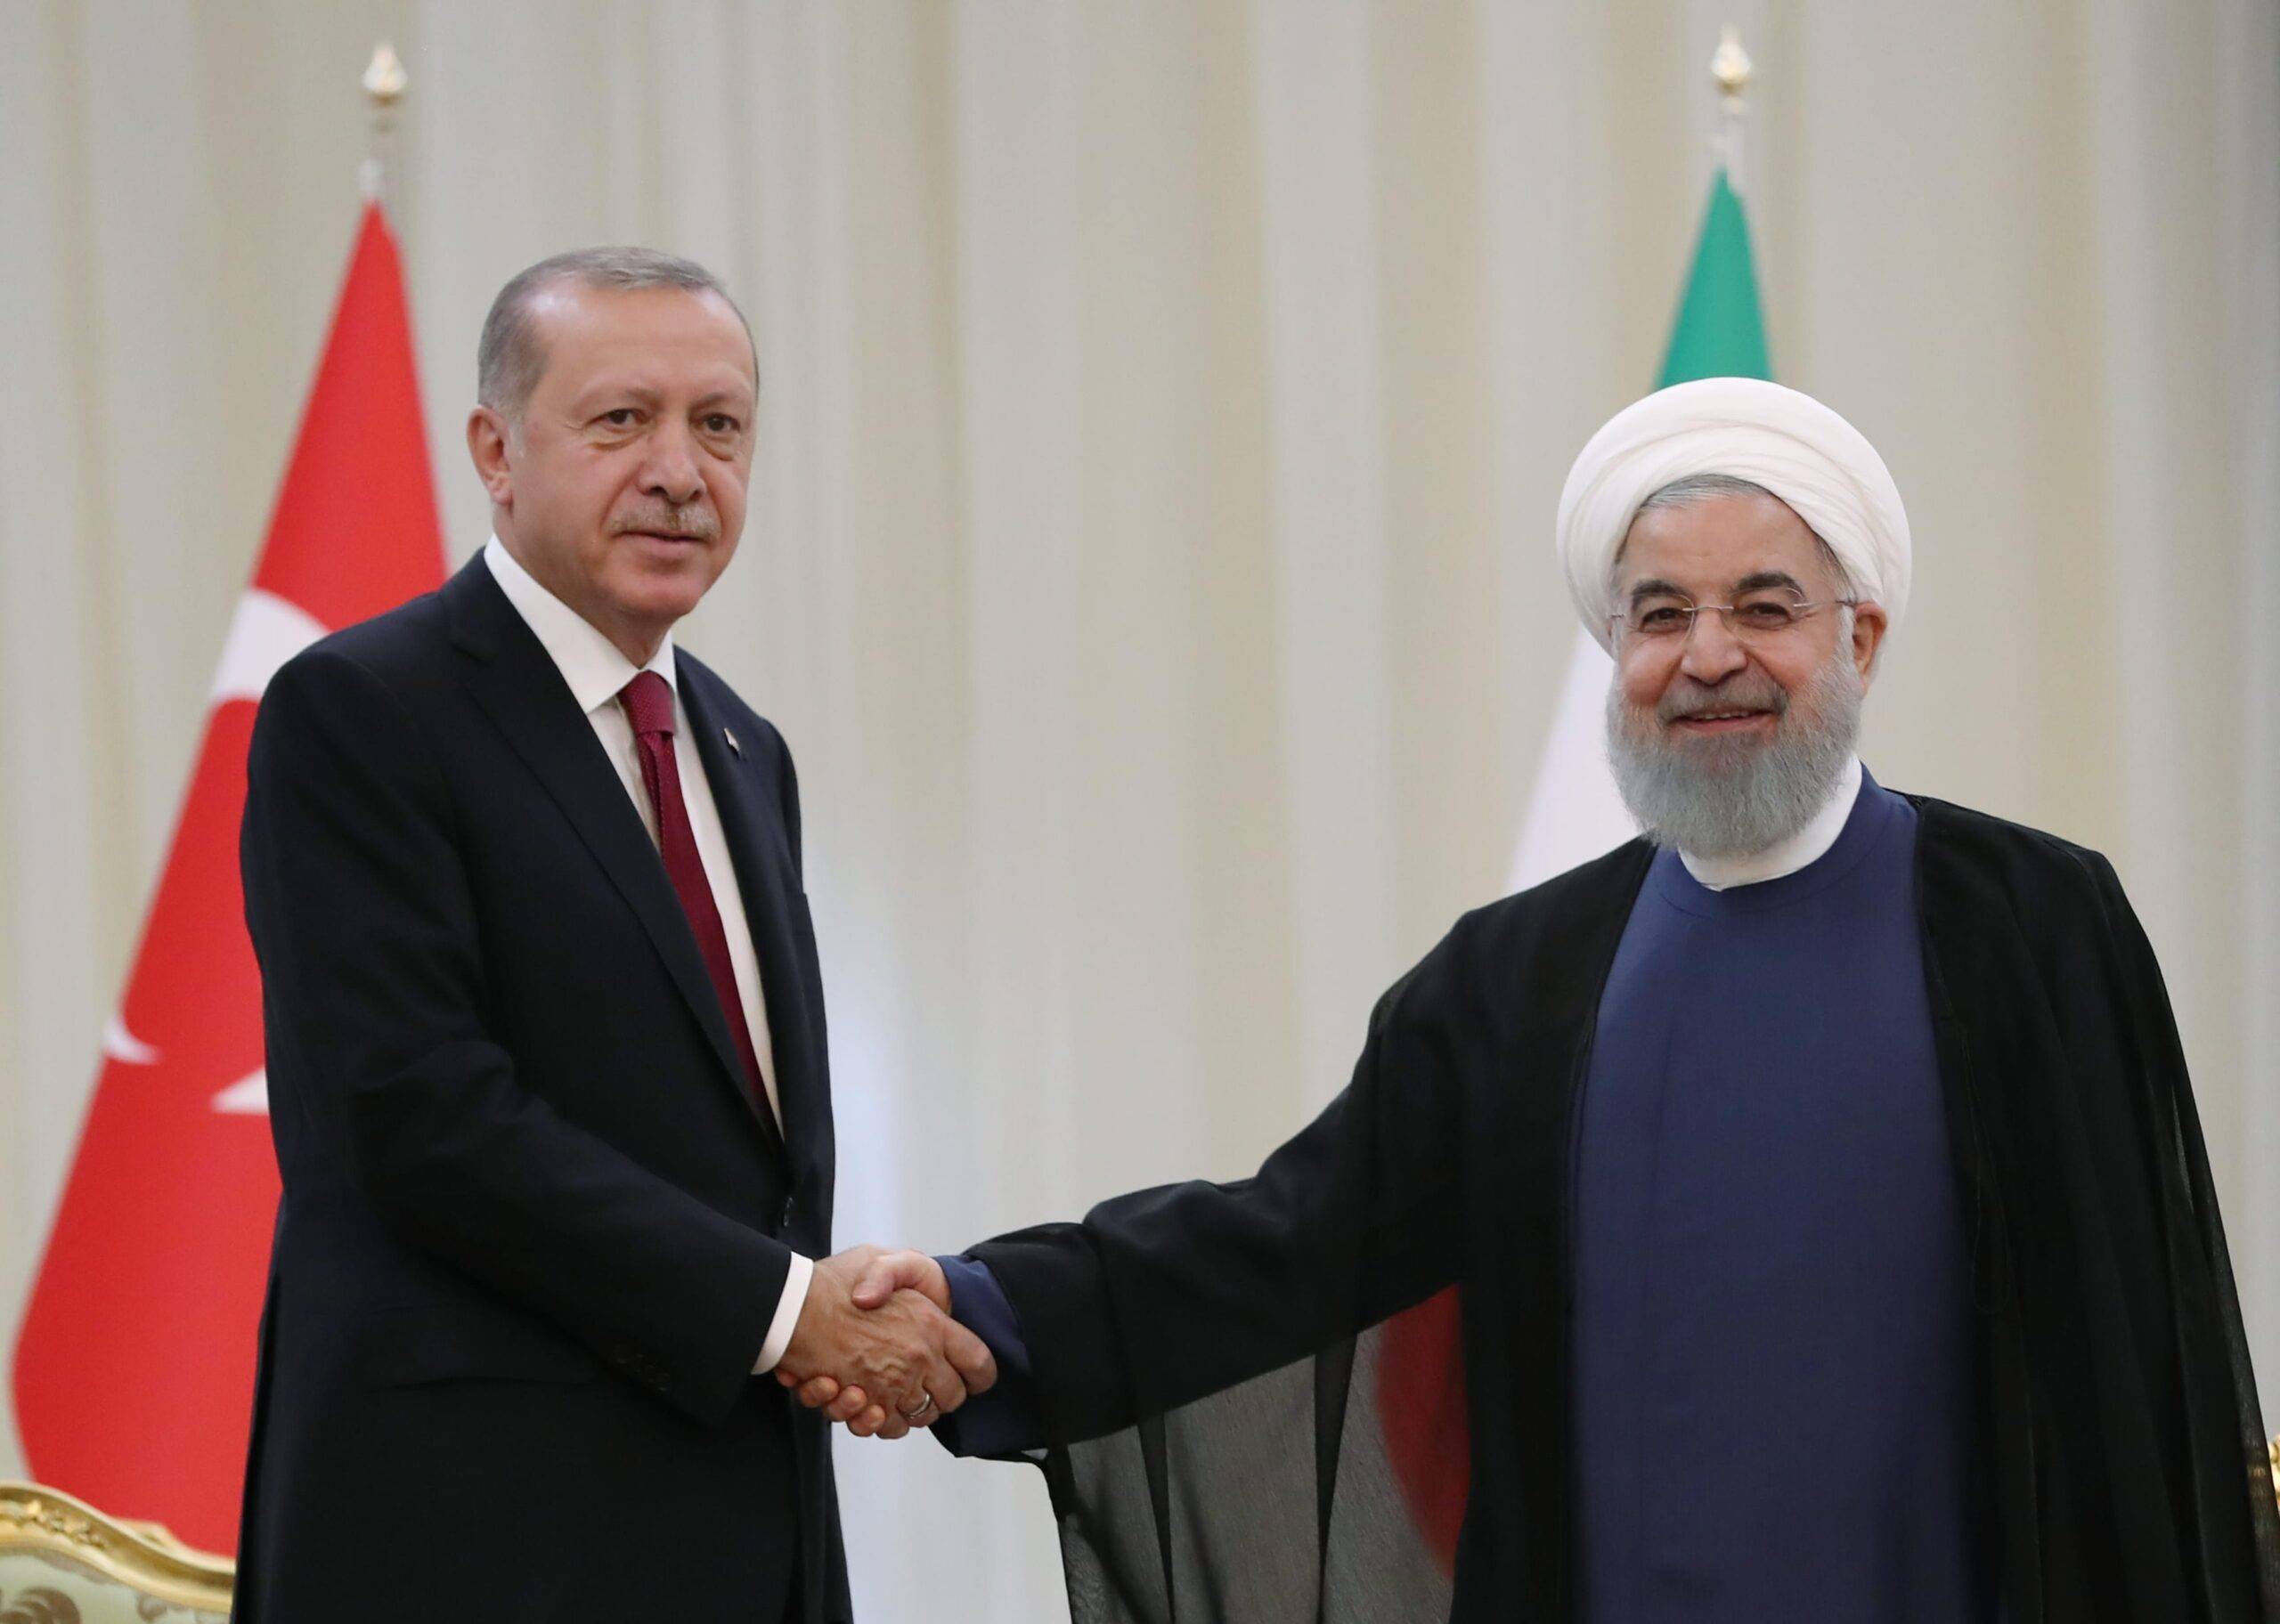 President of Turkey Recep Tayyip Erdogan (L) meets Iranian President Hassan Rouhani (R) ahead of trilateral summit between Turkey, Iran and Russia on September 7, 2018 in Tehran, Iran. ( Kayhan Özer - Anadolu Agency )